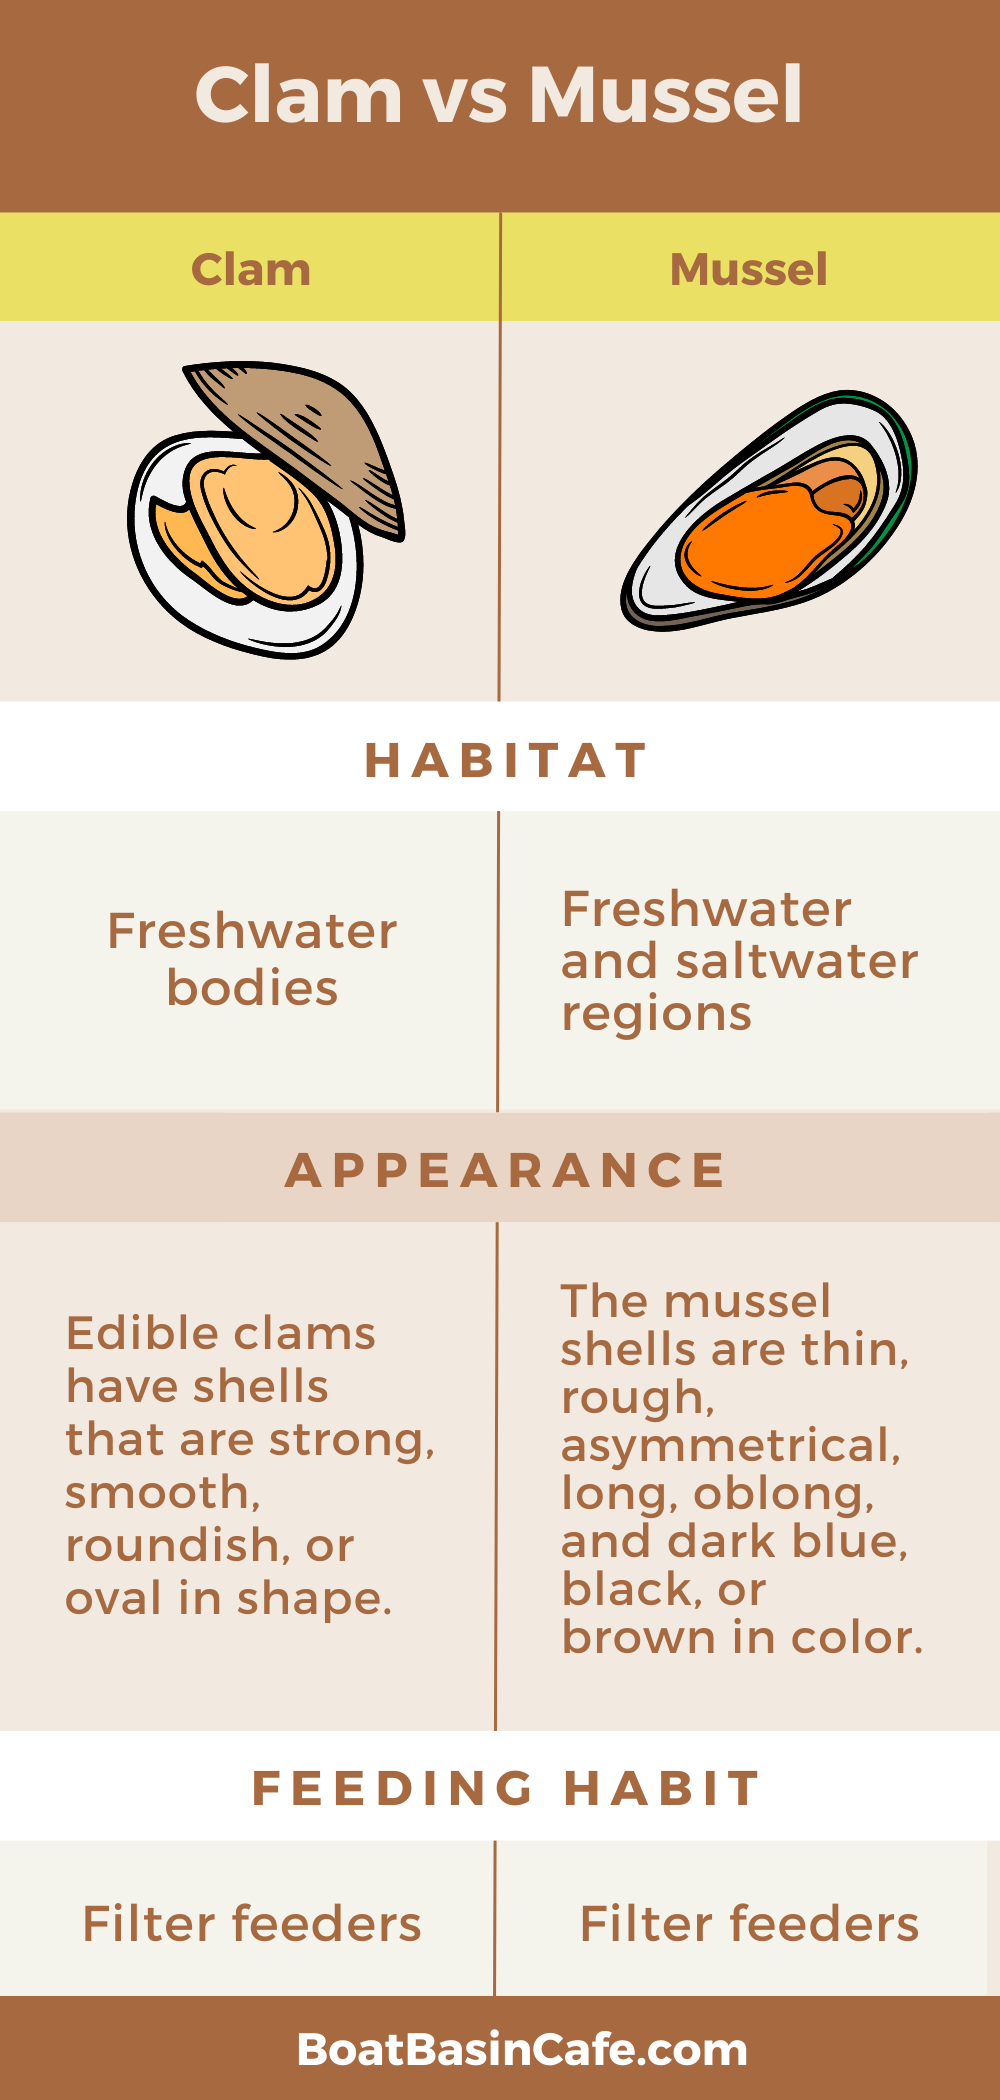 Clams vs Mussels: 6 Perbezaan Utama Dijelaskan